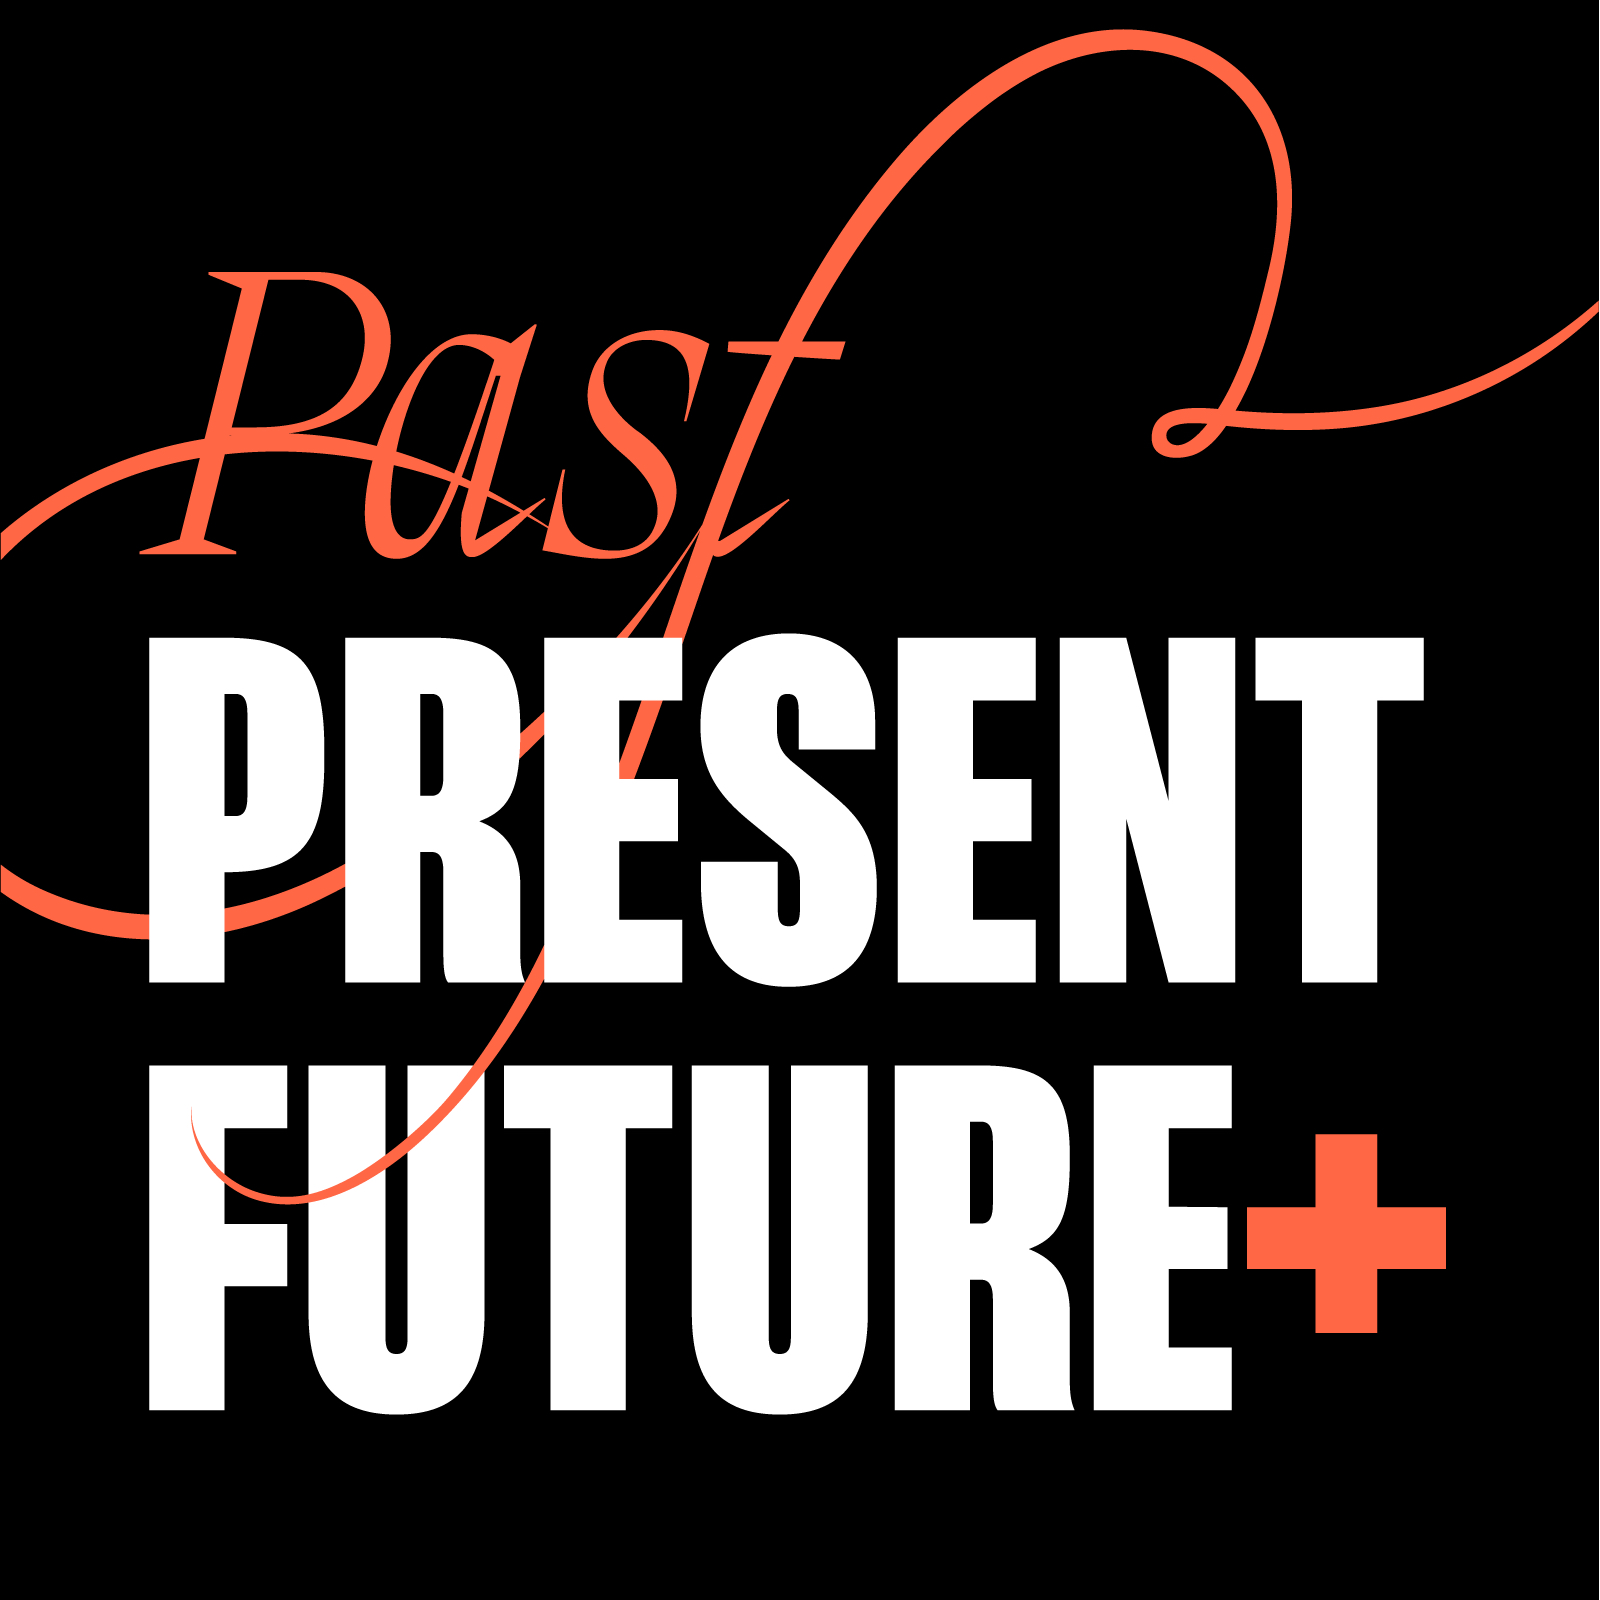 Past Present Future logo